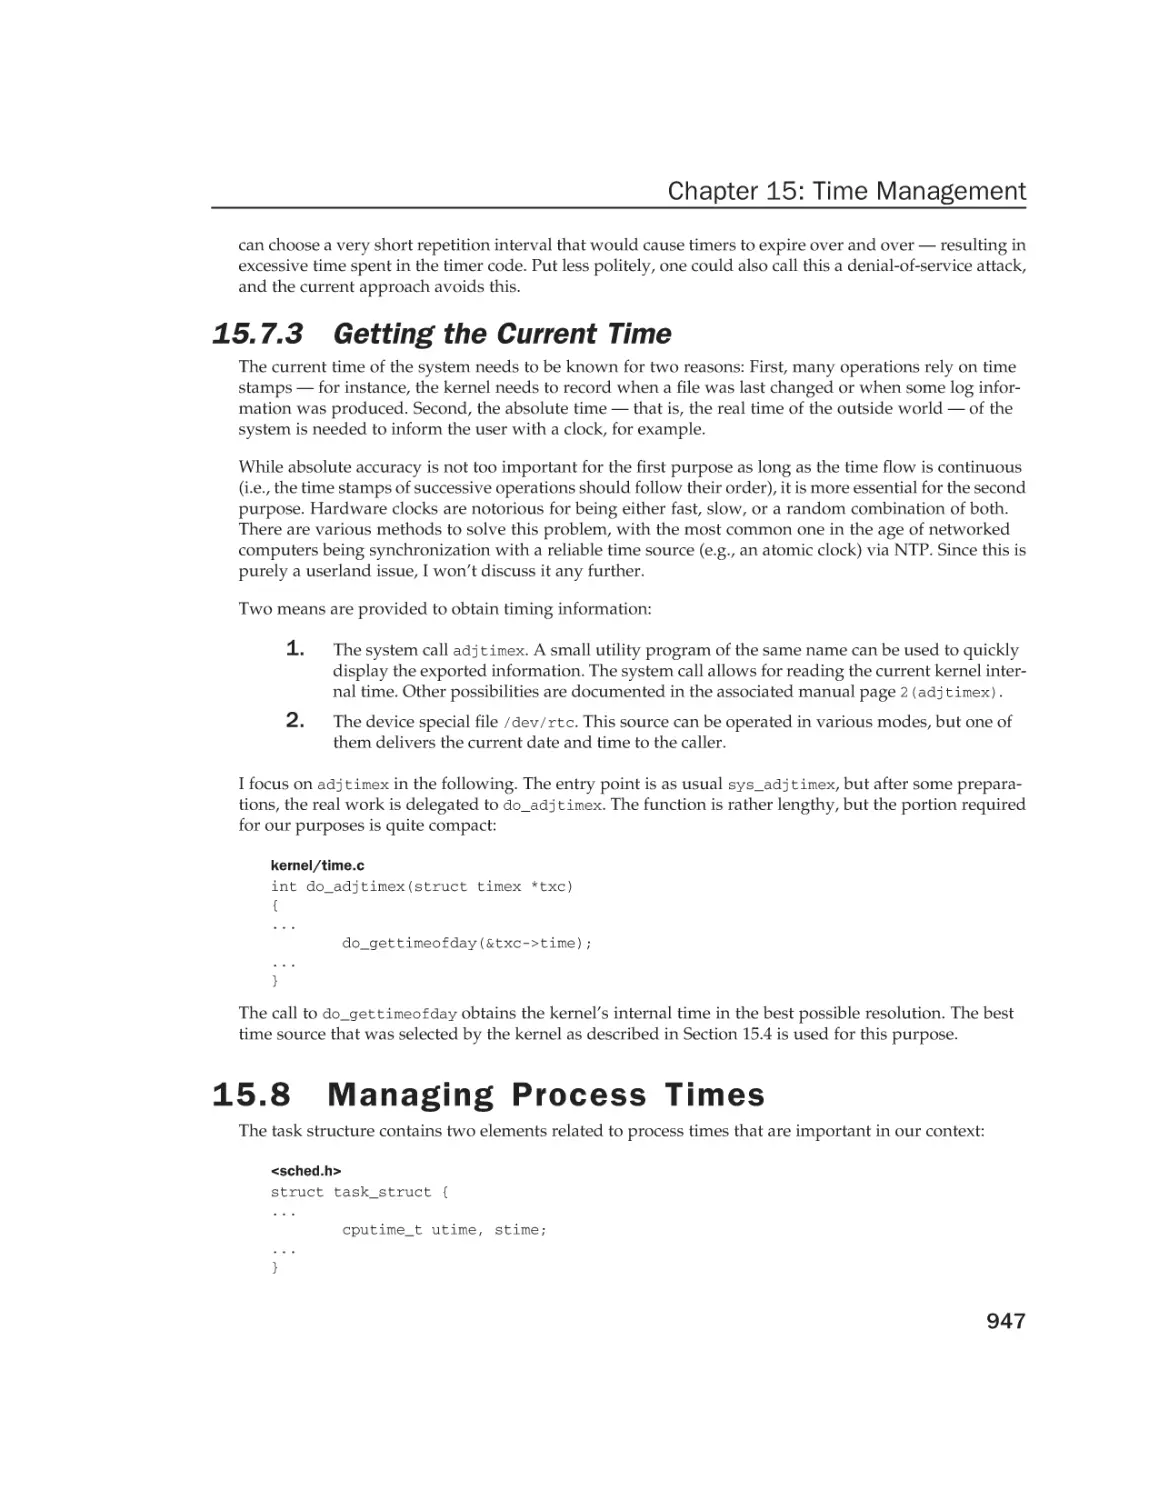 15.8 Managing Process Times